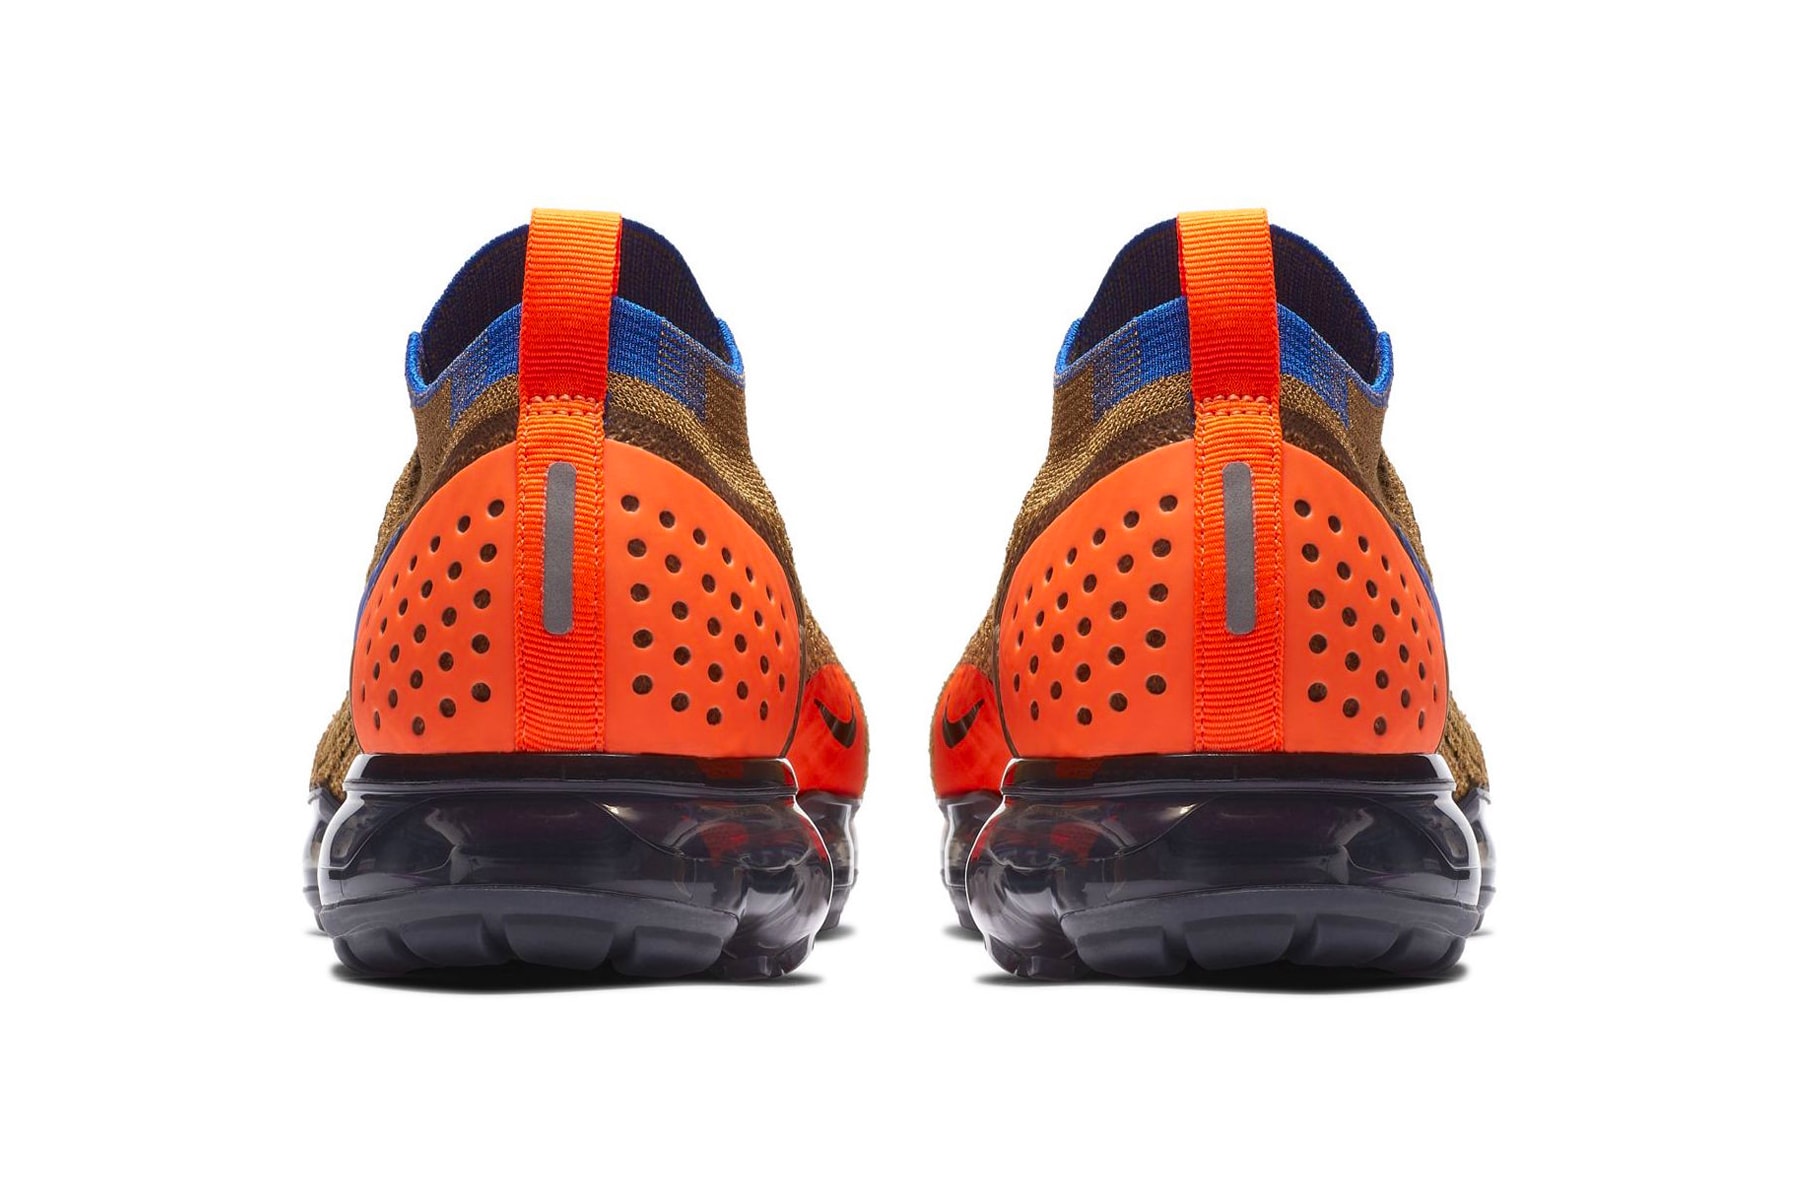 Nike Air VaporMax 2 Fall winter 2018 first look sneakers brown blue orange